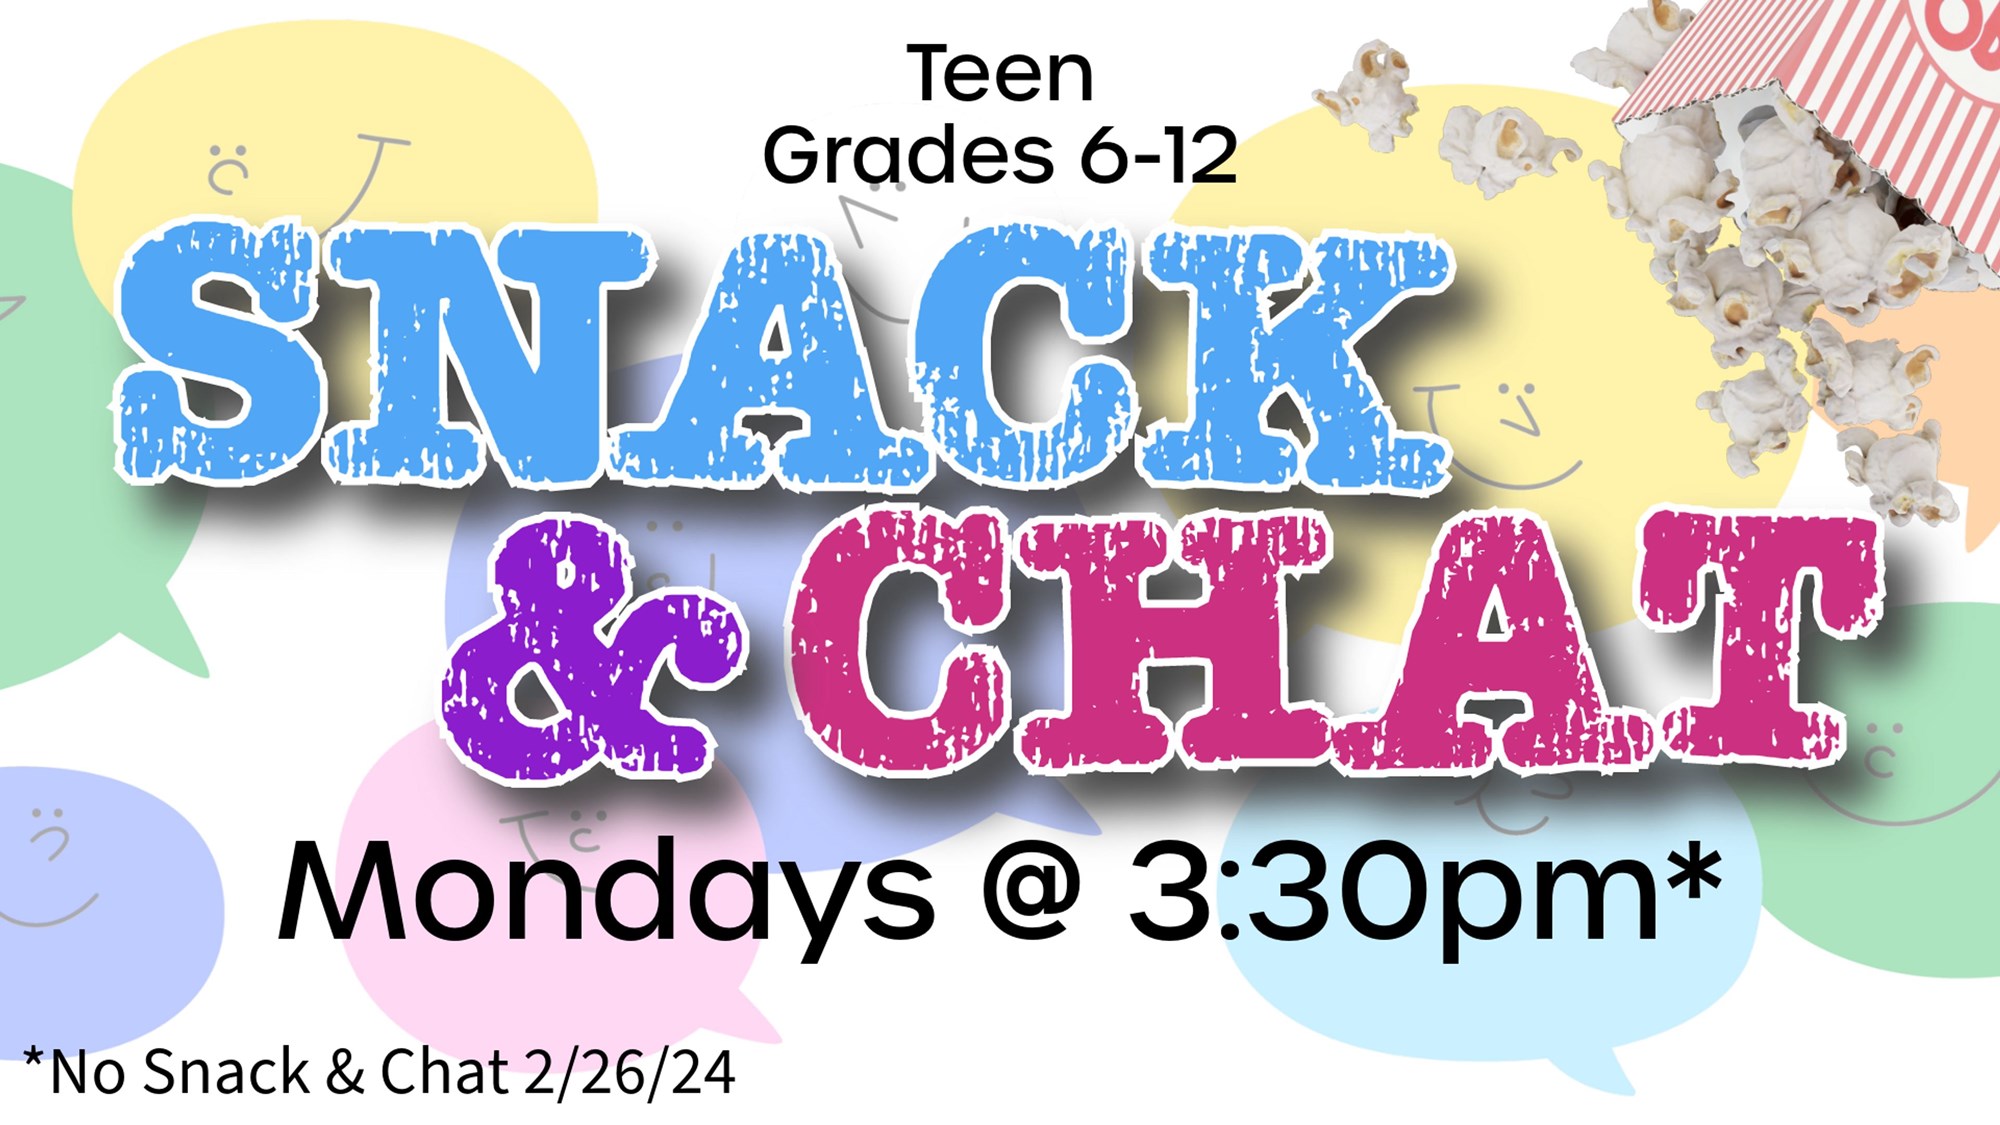 Teen Grades 6-12 Snack & Chat Mondays @ 3:30pm